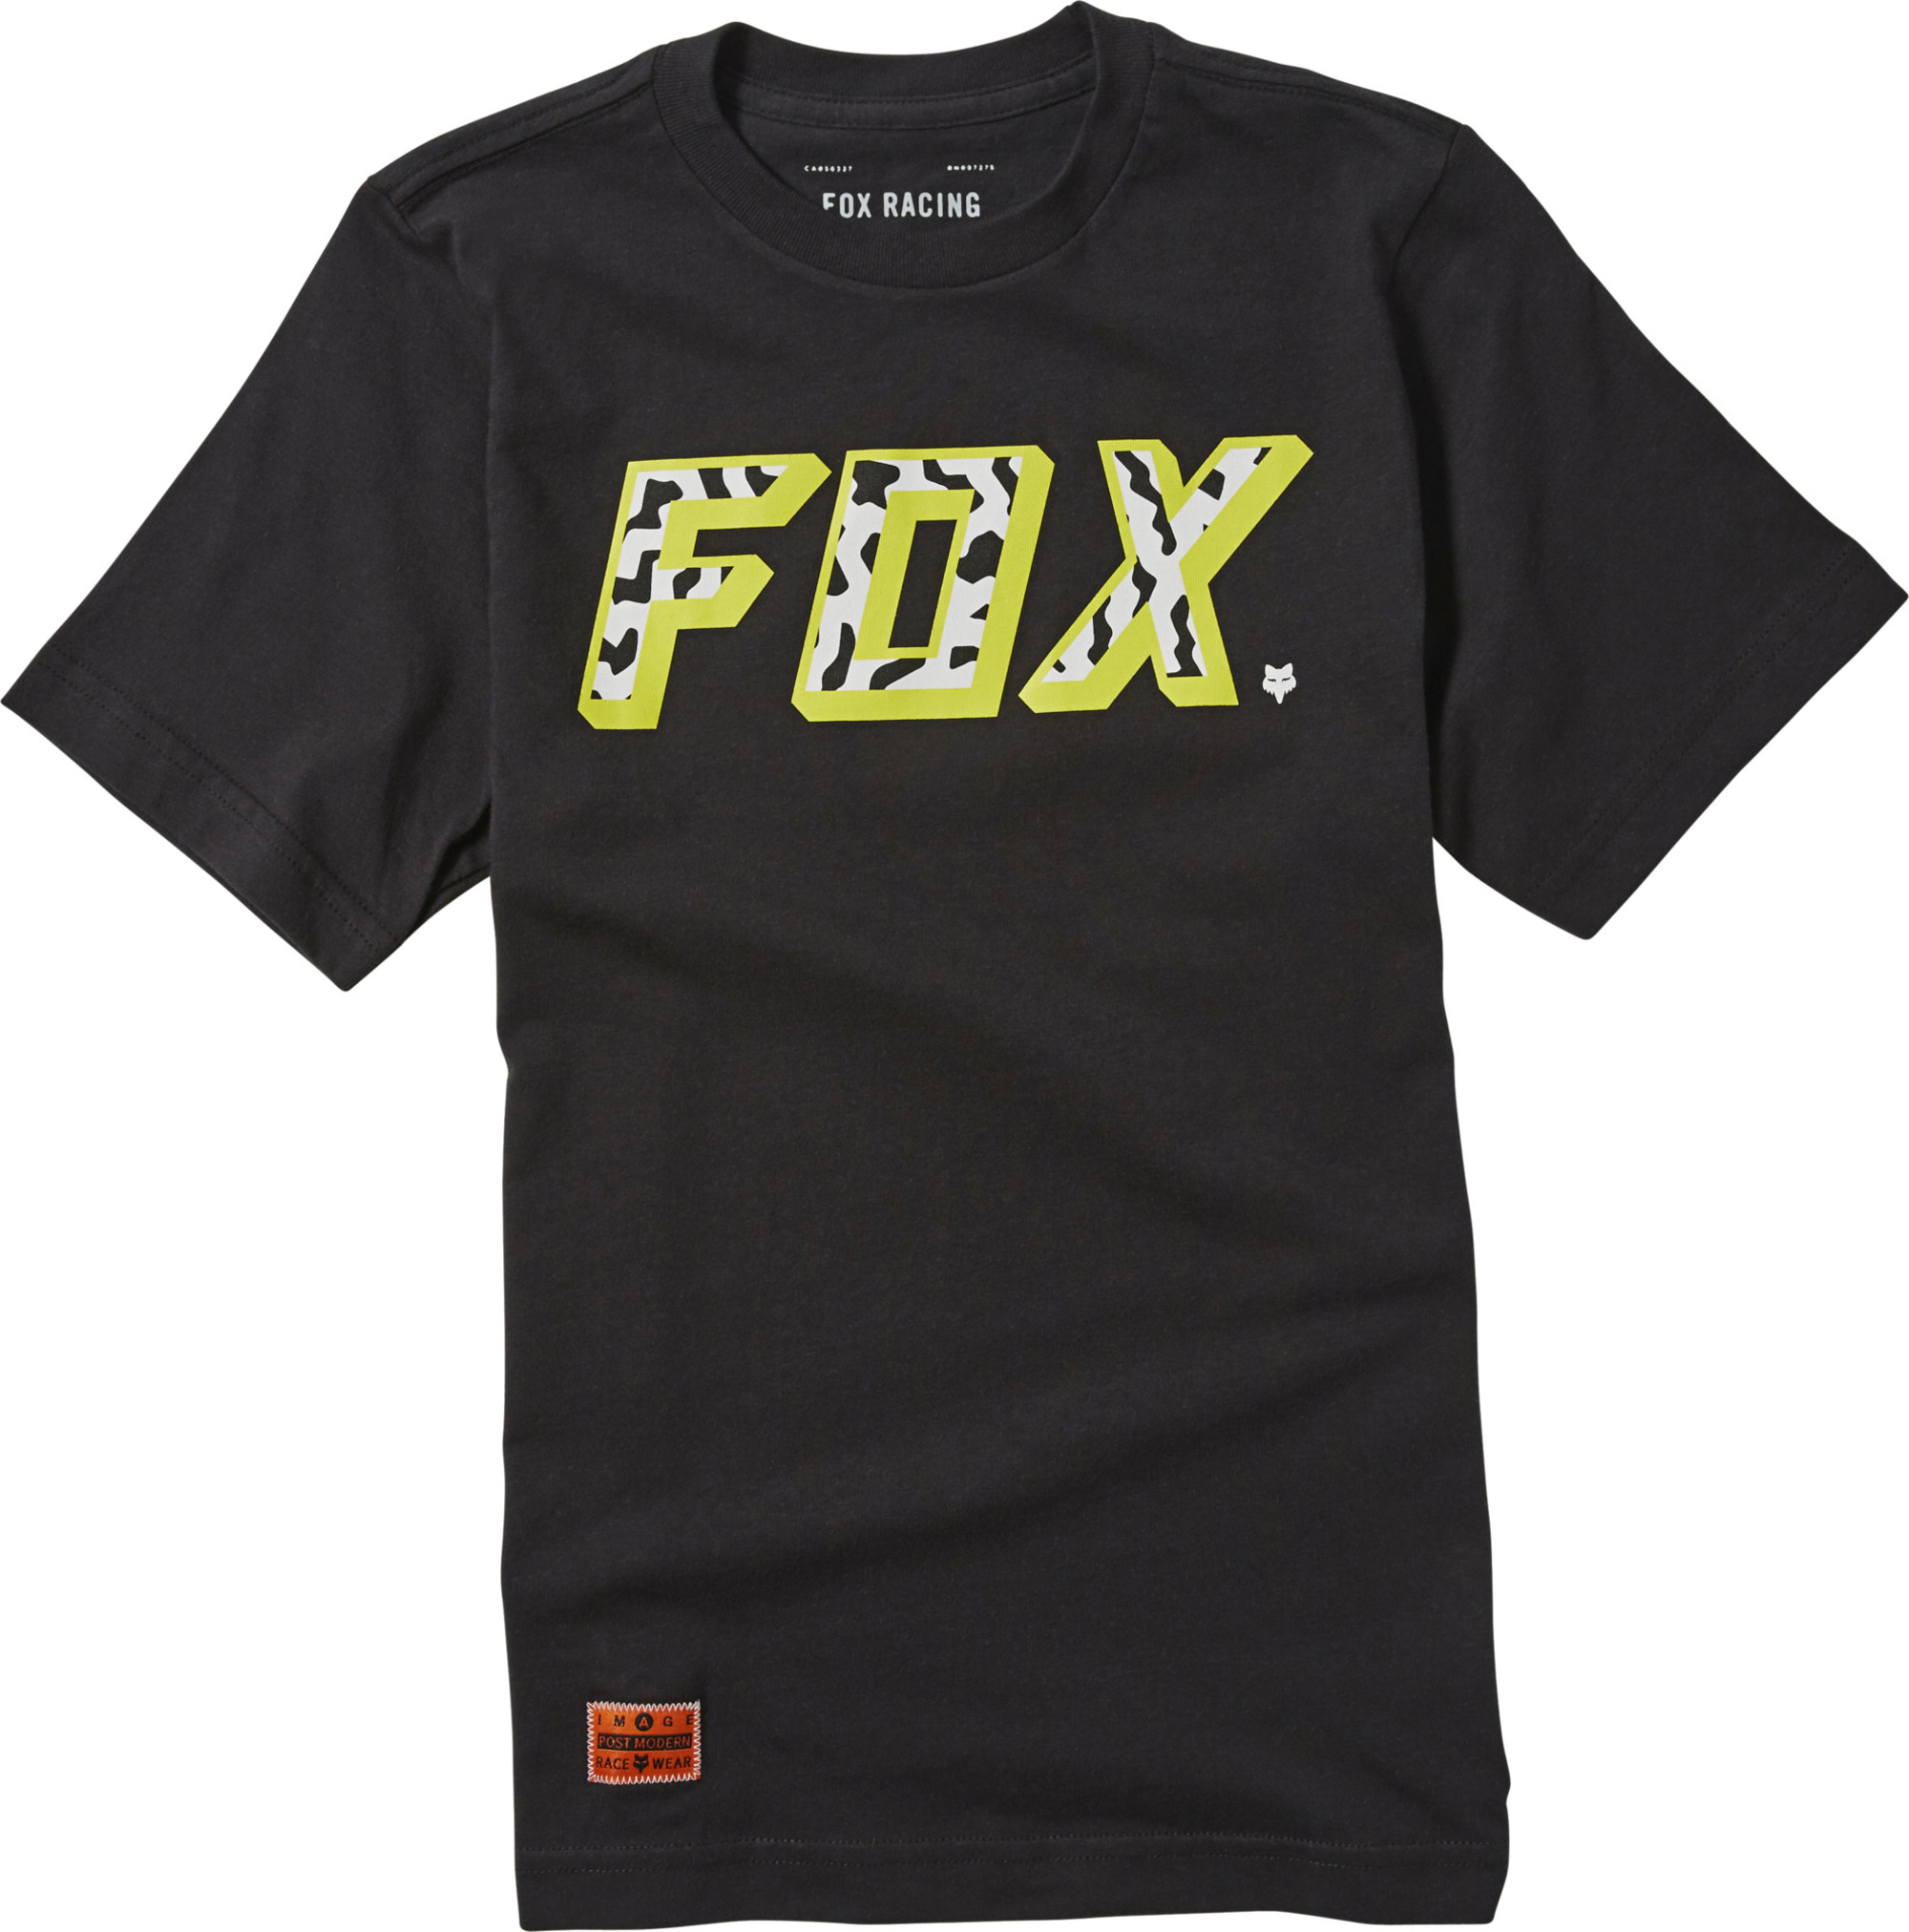 fox racing t-shirt shirts for kids psycosis